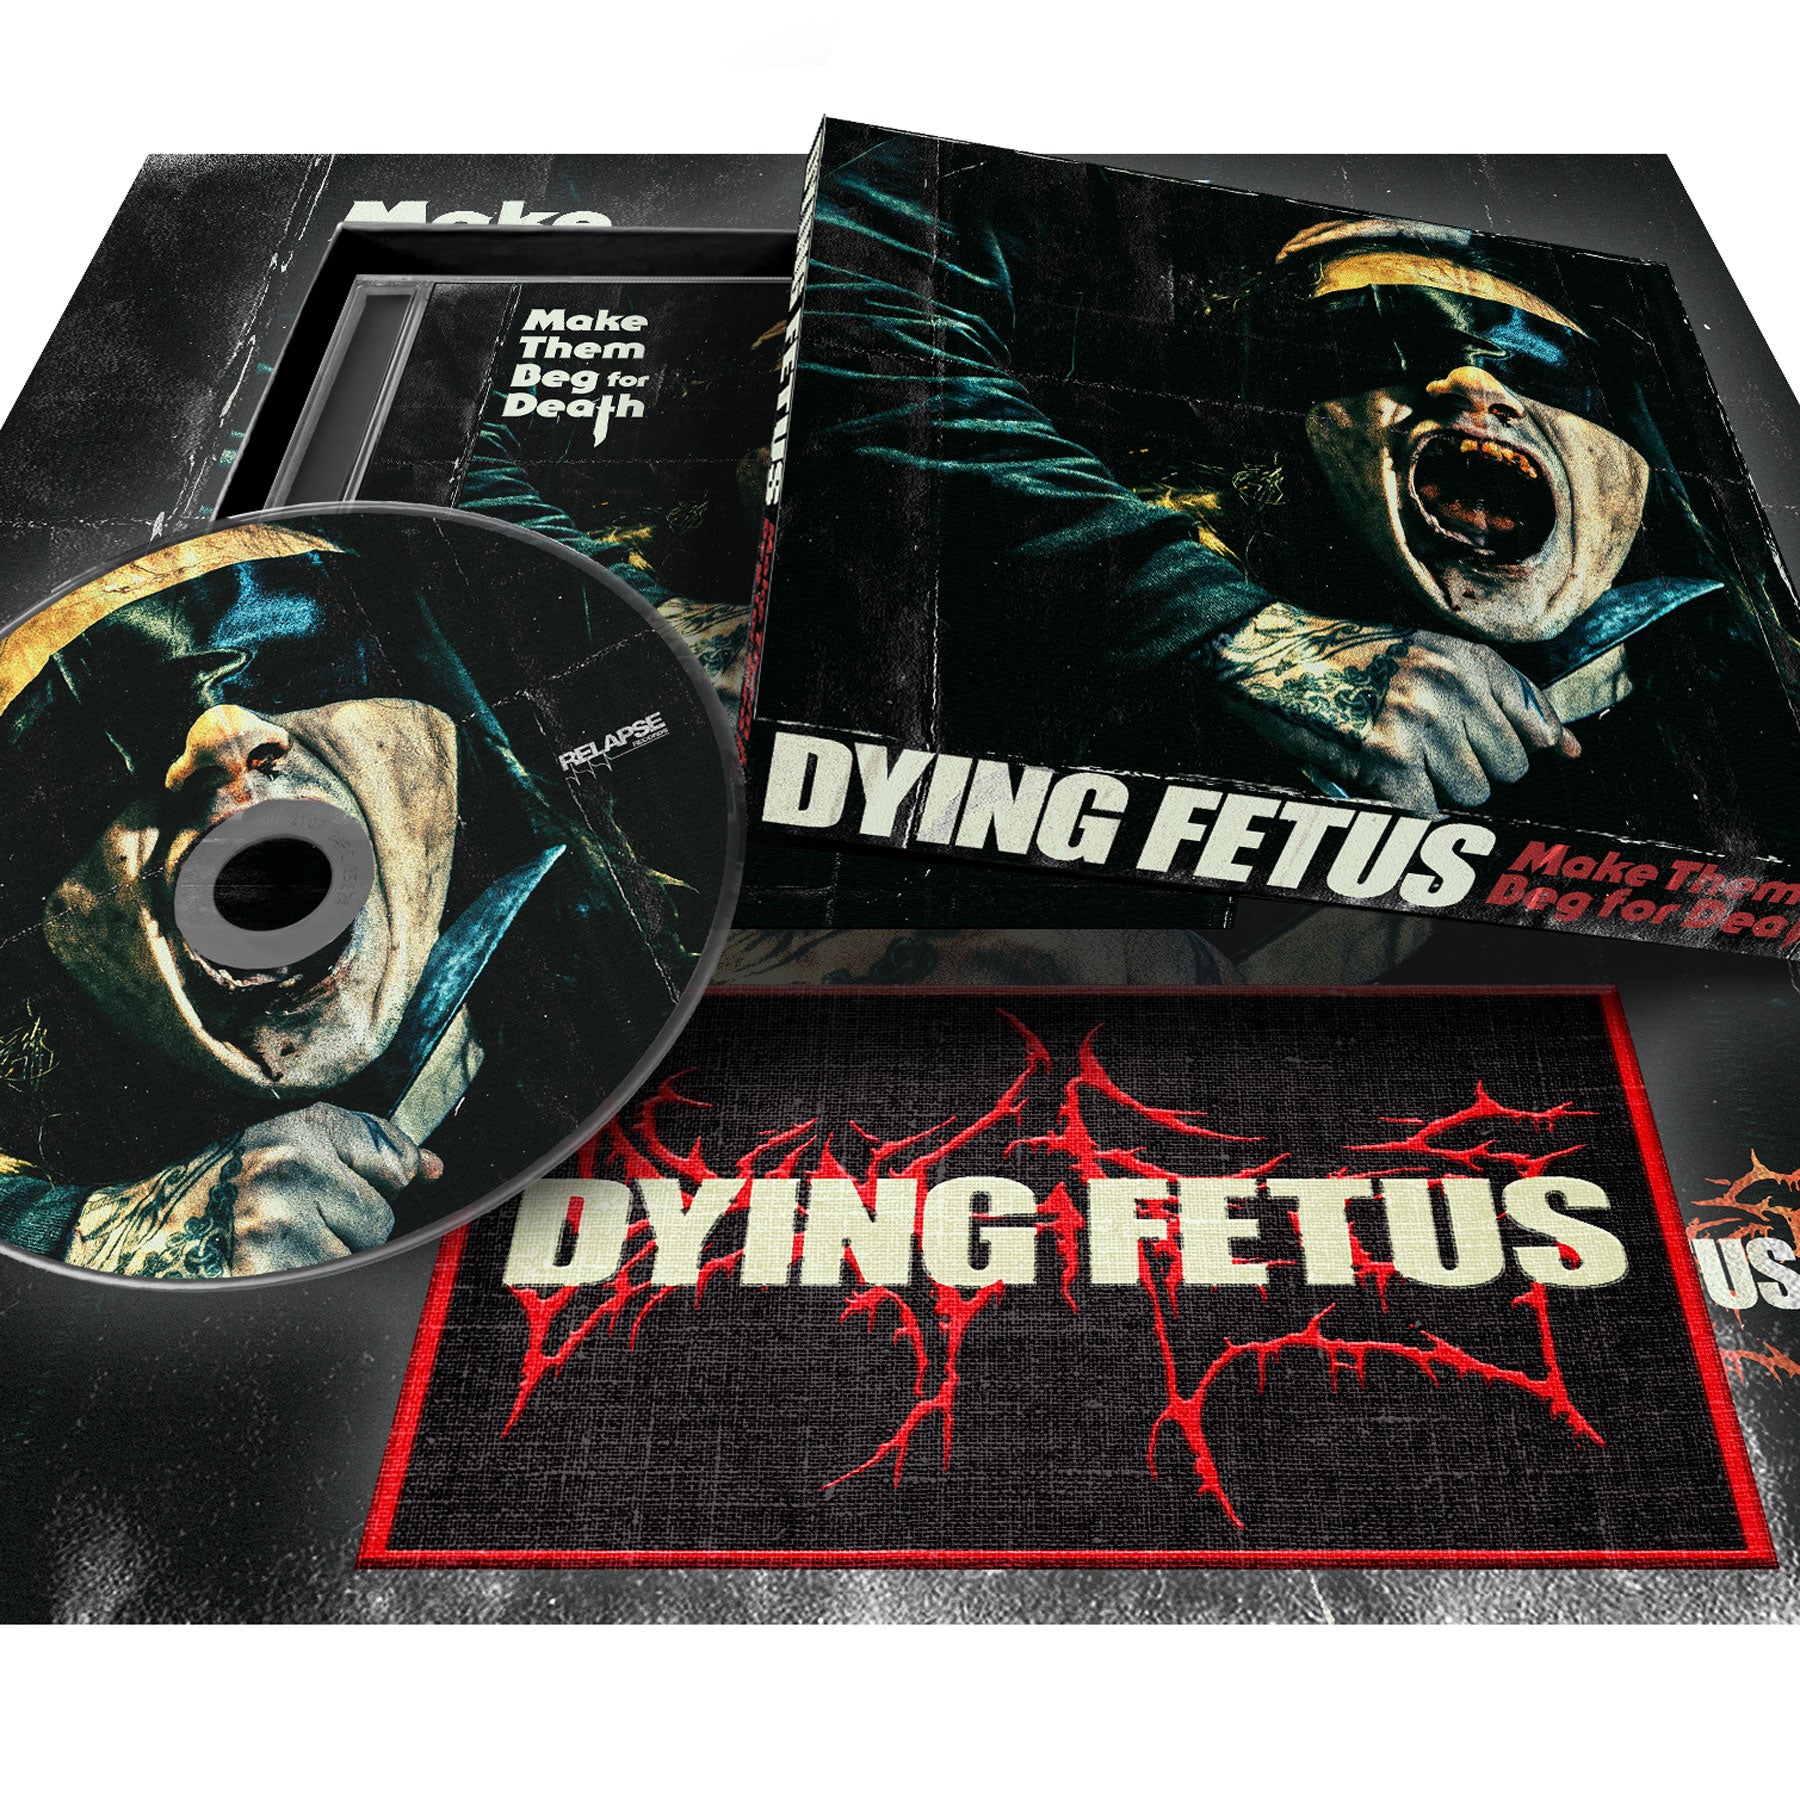 Dying Fetus "Make Them Beg For Death CD Boxset" Deluxe CD Boxset Edition CD